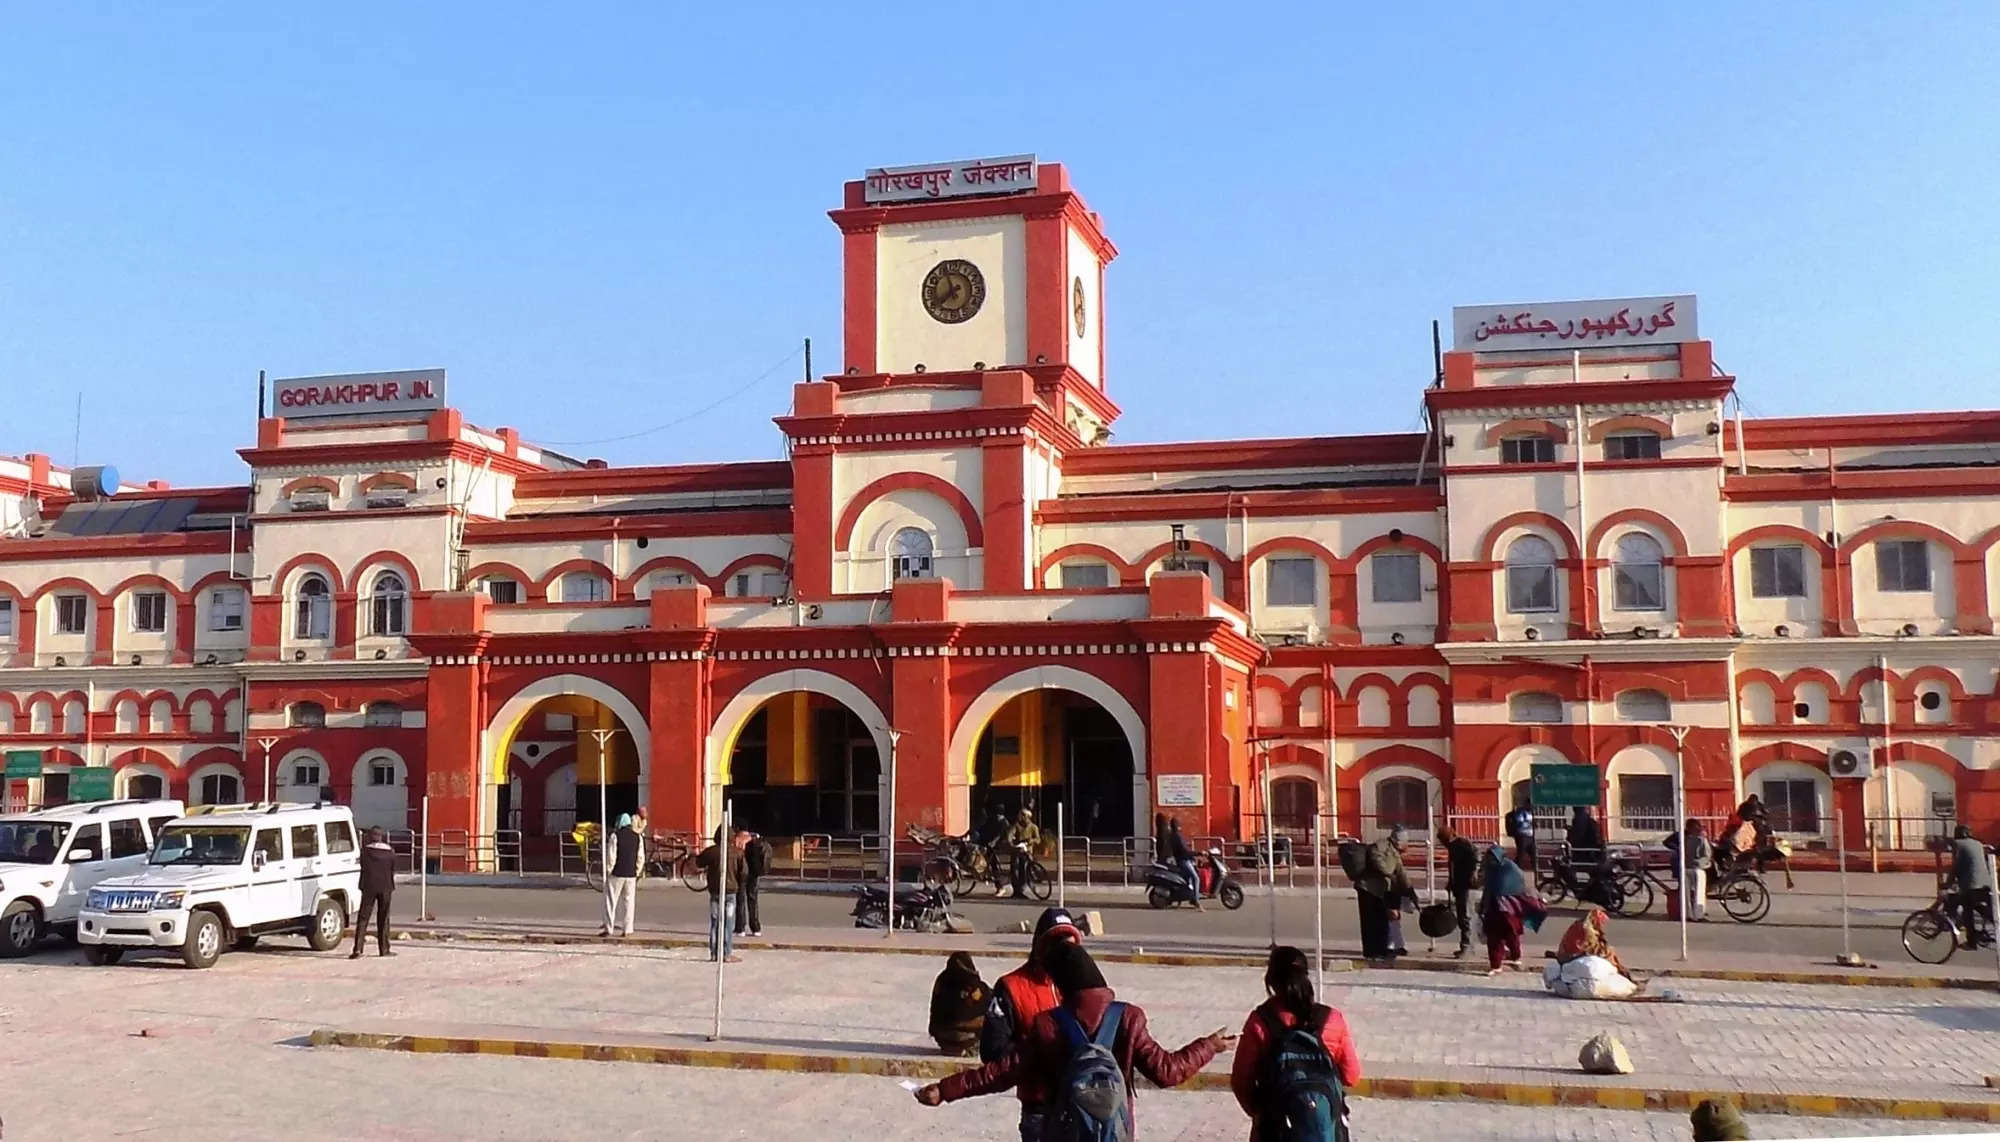  Gorakhpur Railway Station